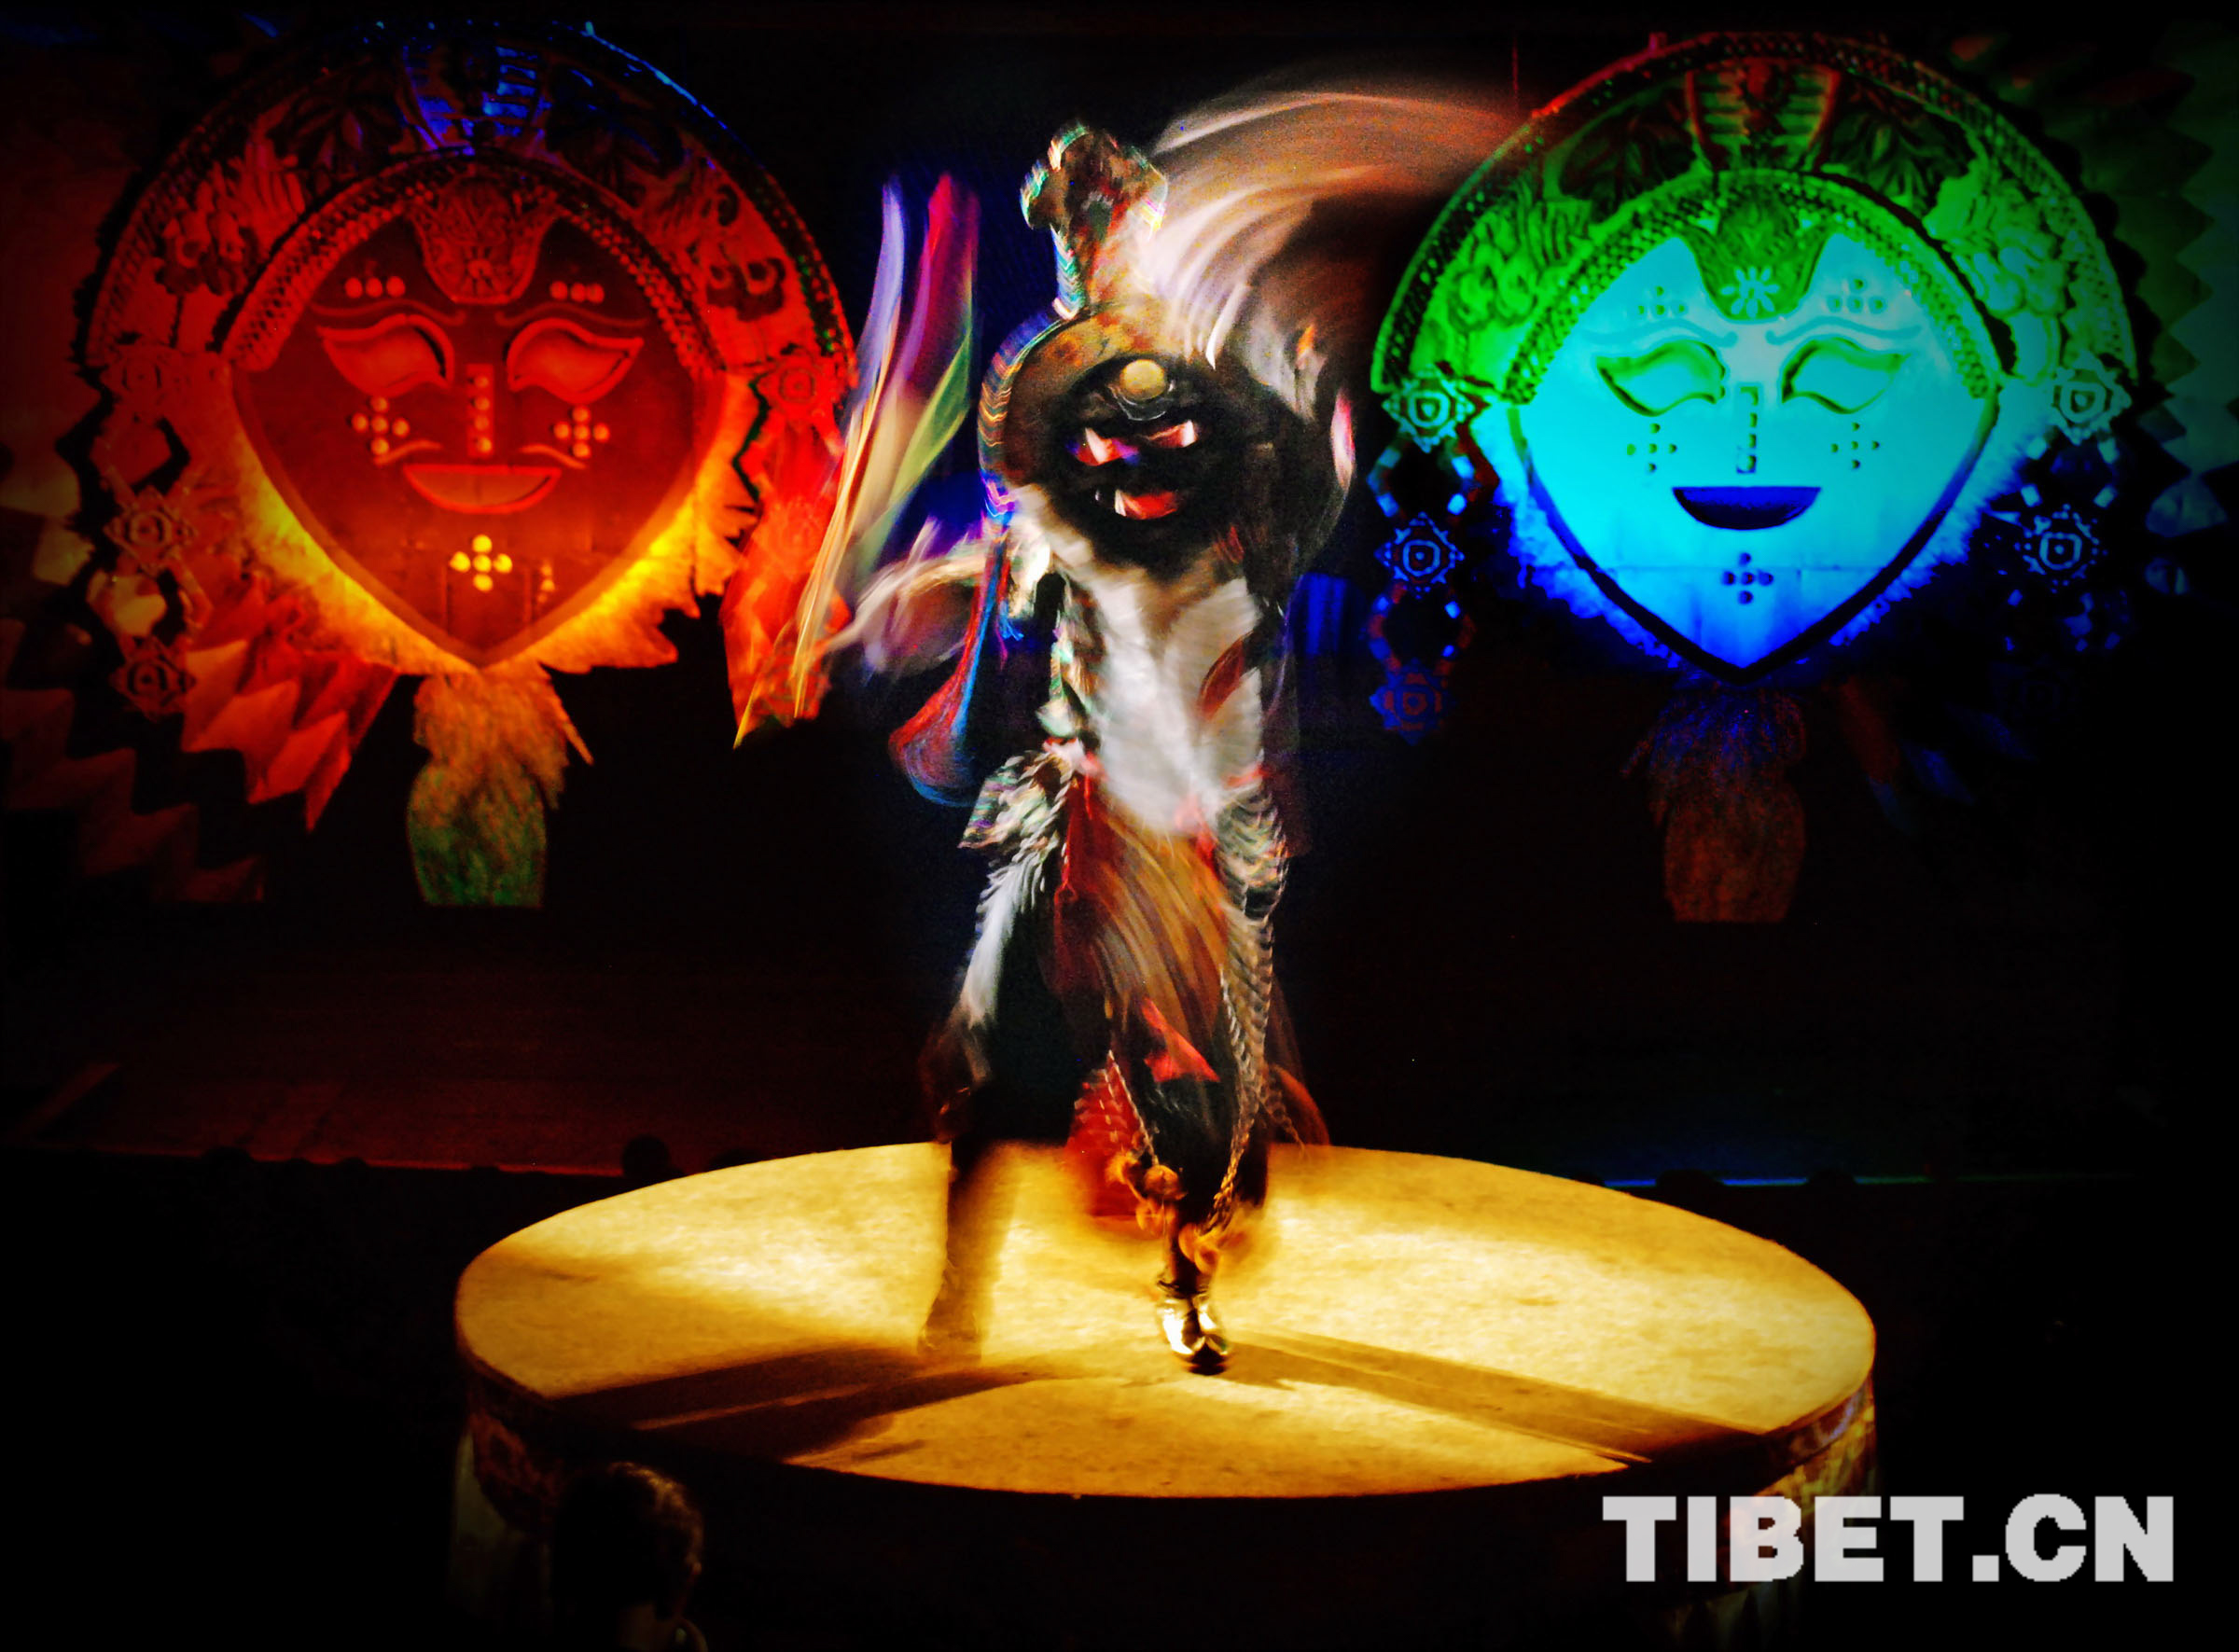 Tibet creates realistic thematic Tibetan opera stage drama